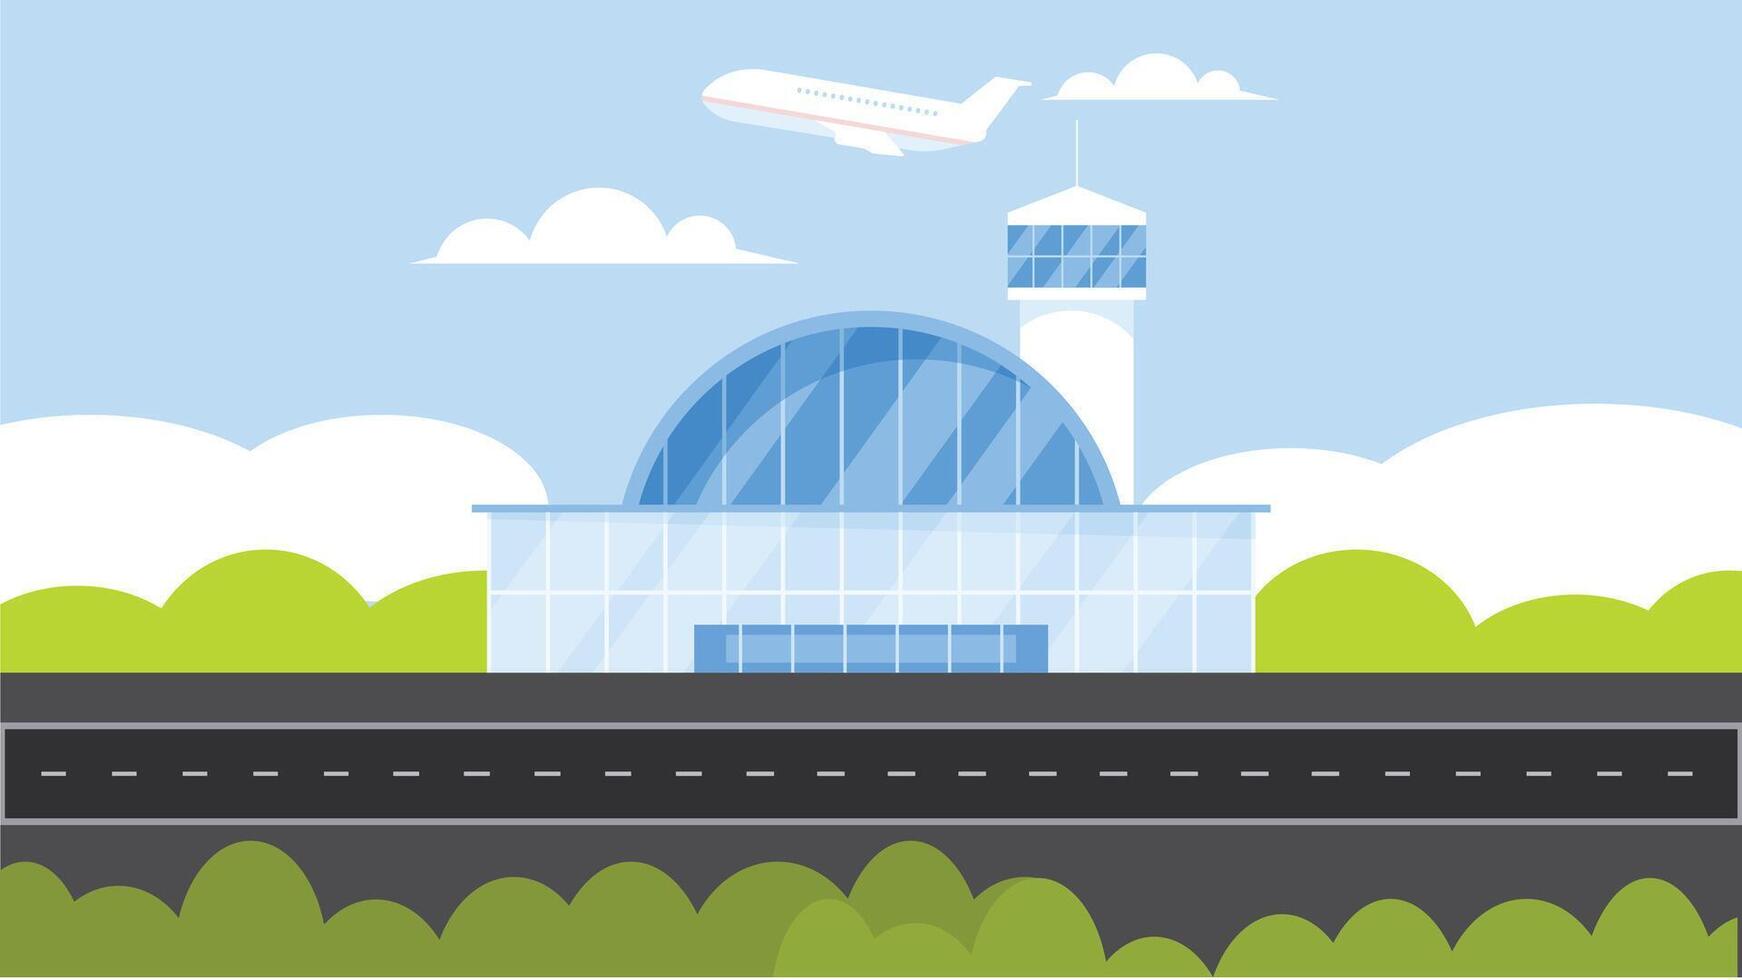 Airport runway with departure building vector illustration